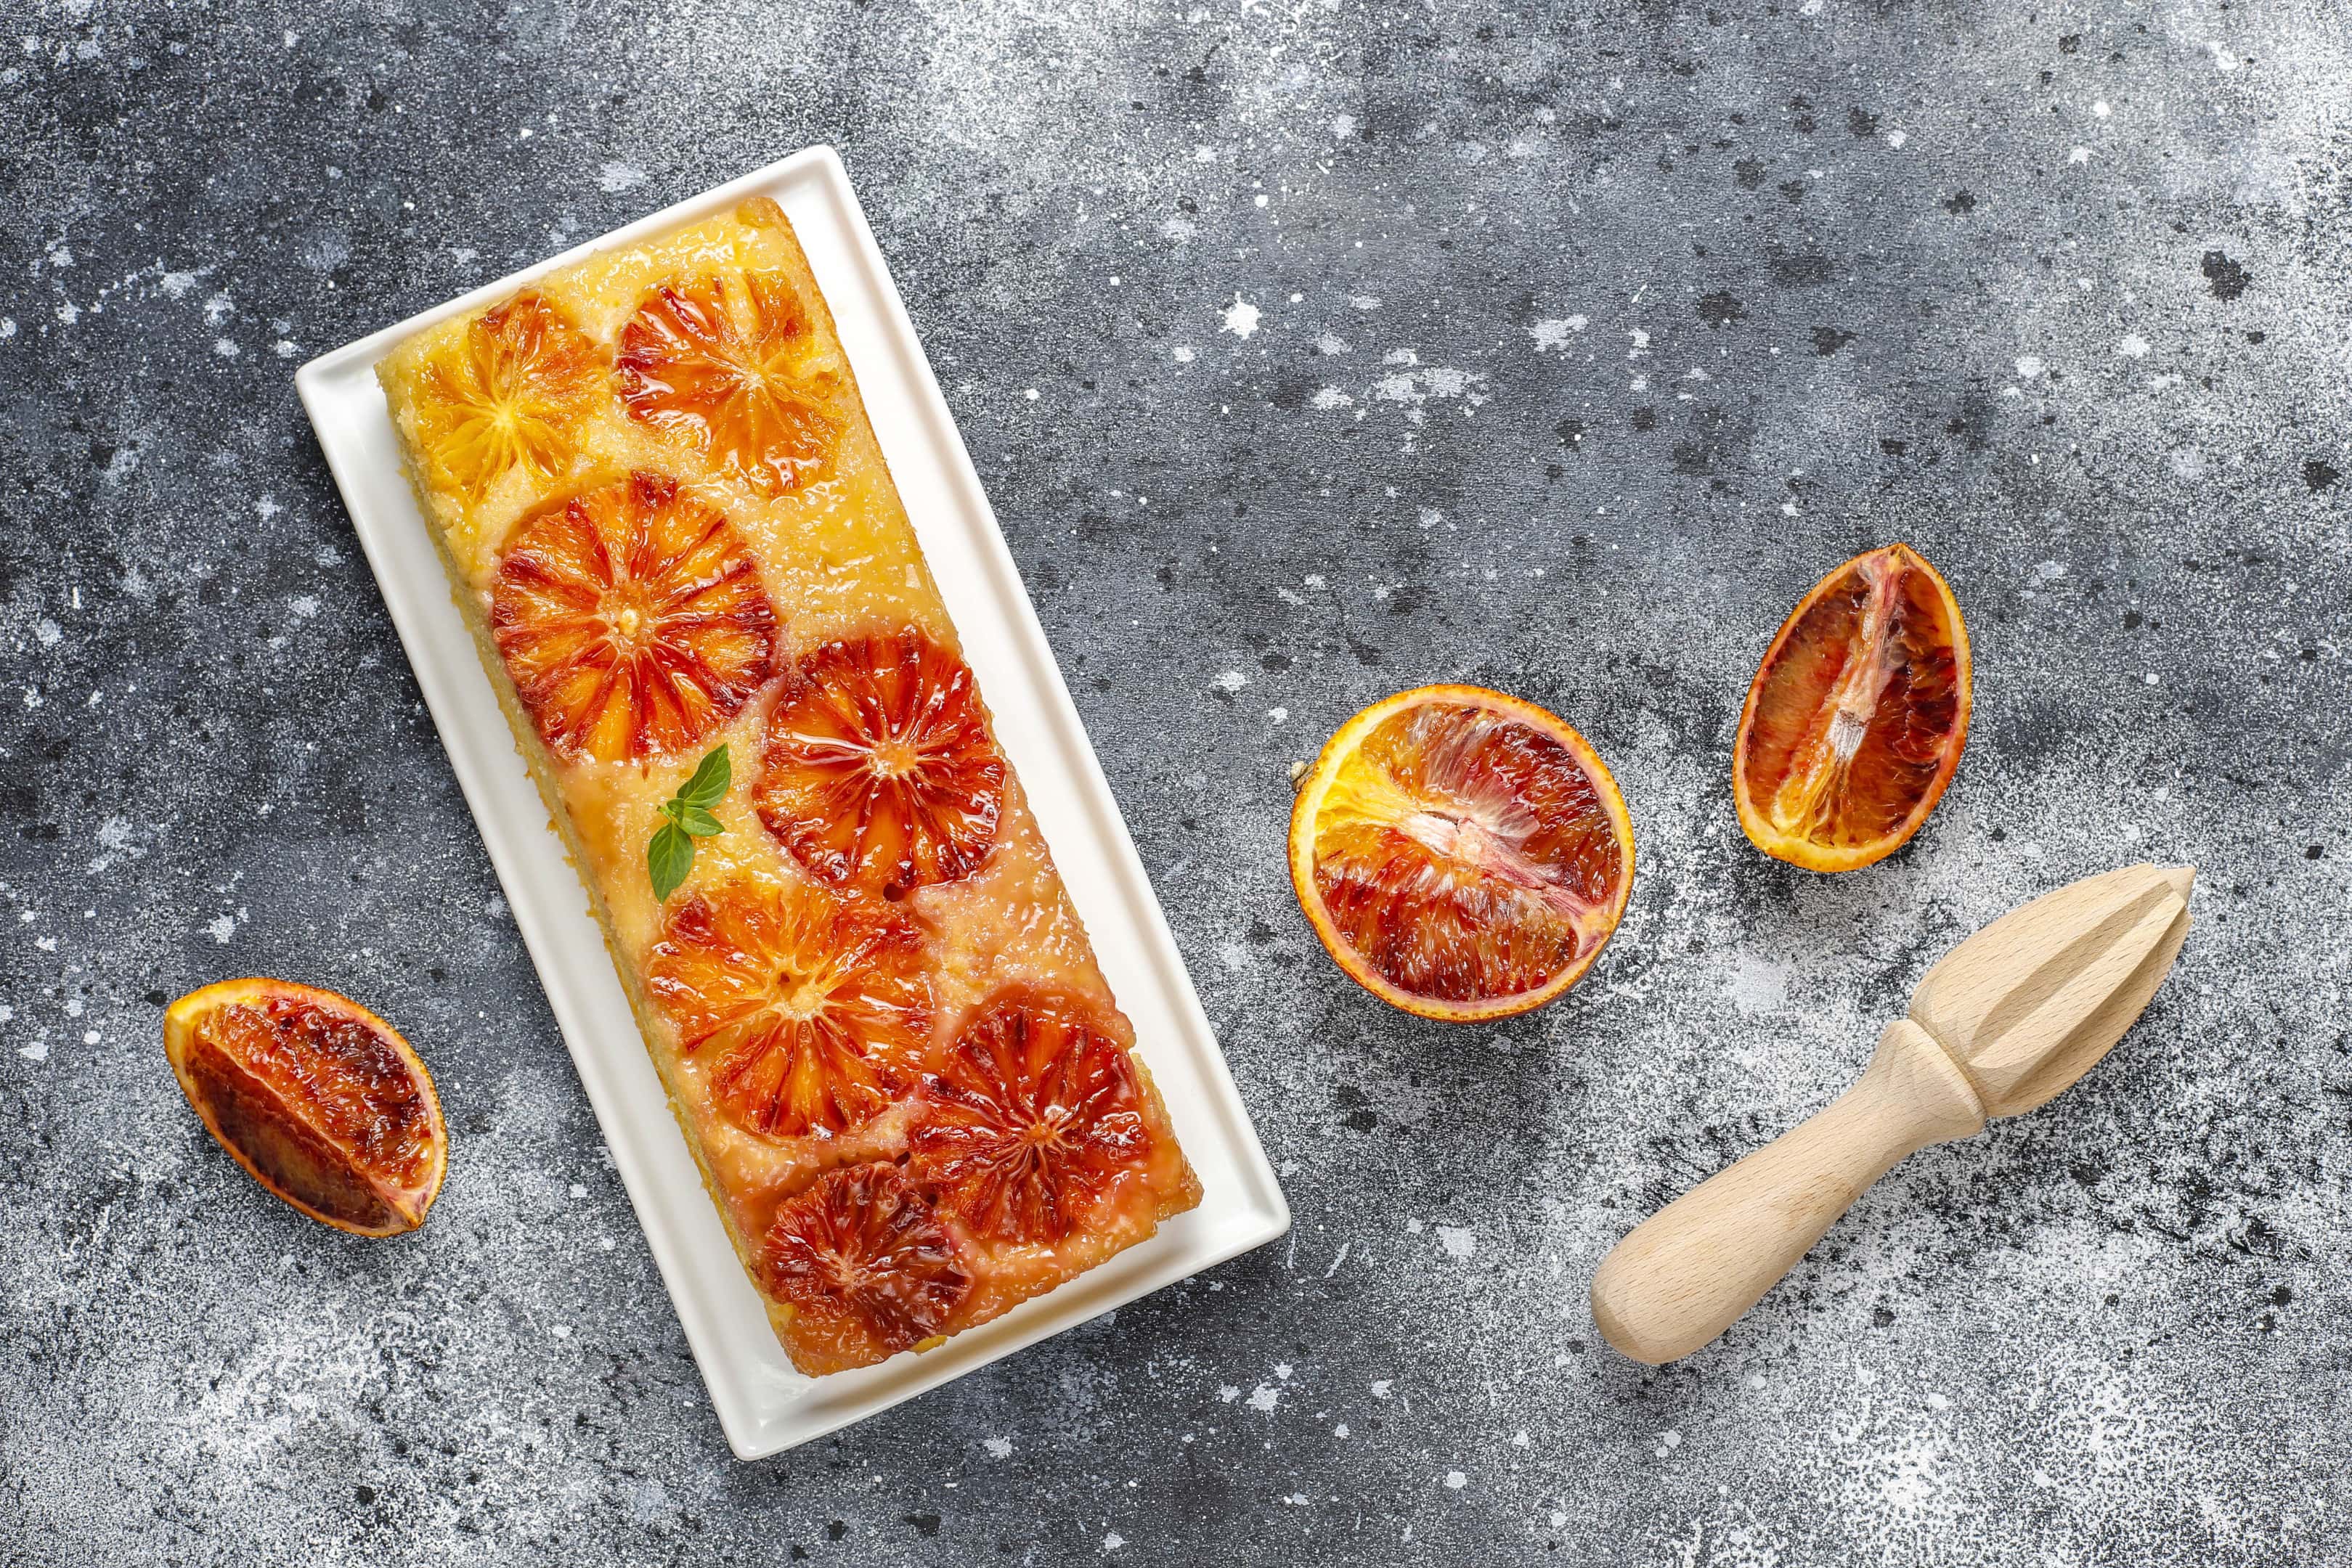 French dessert — tarte tatin with blood orange